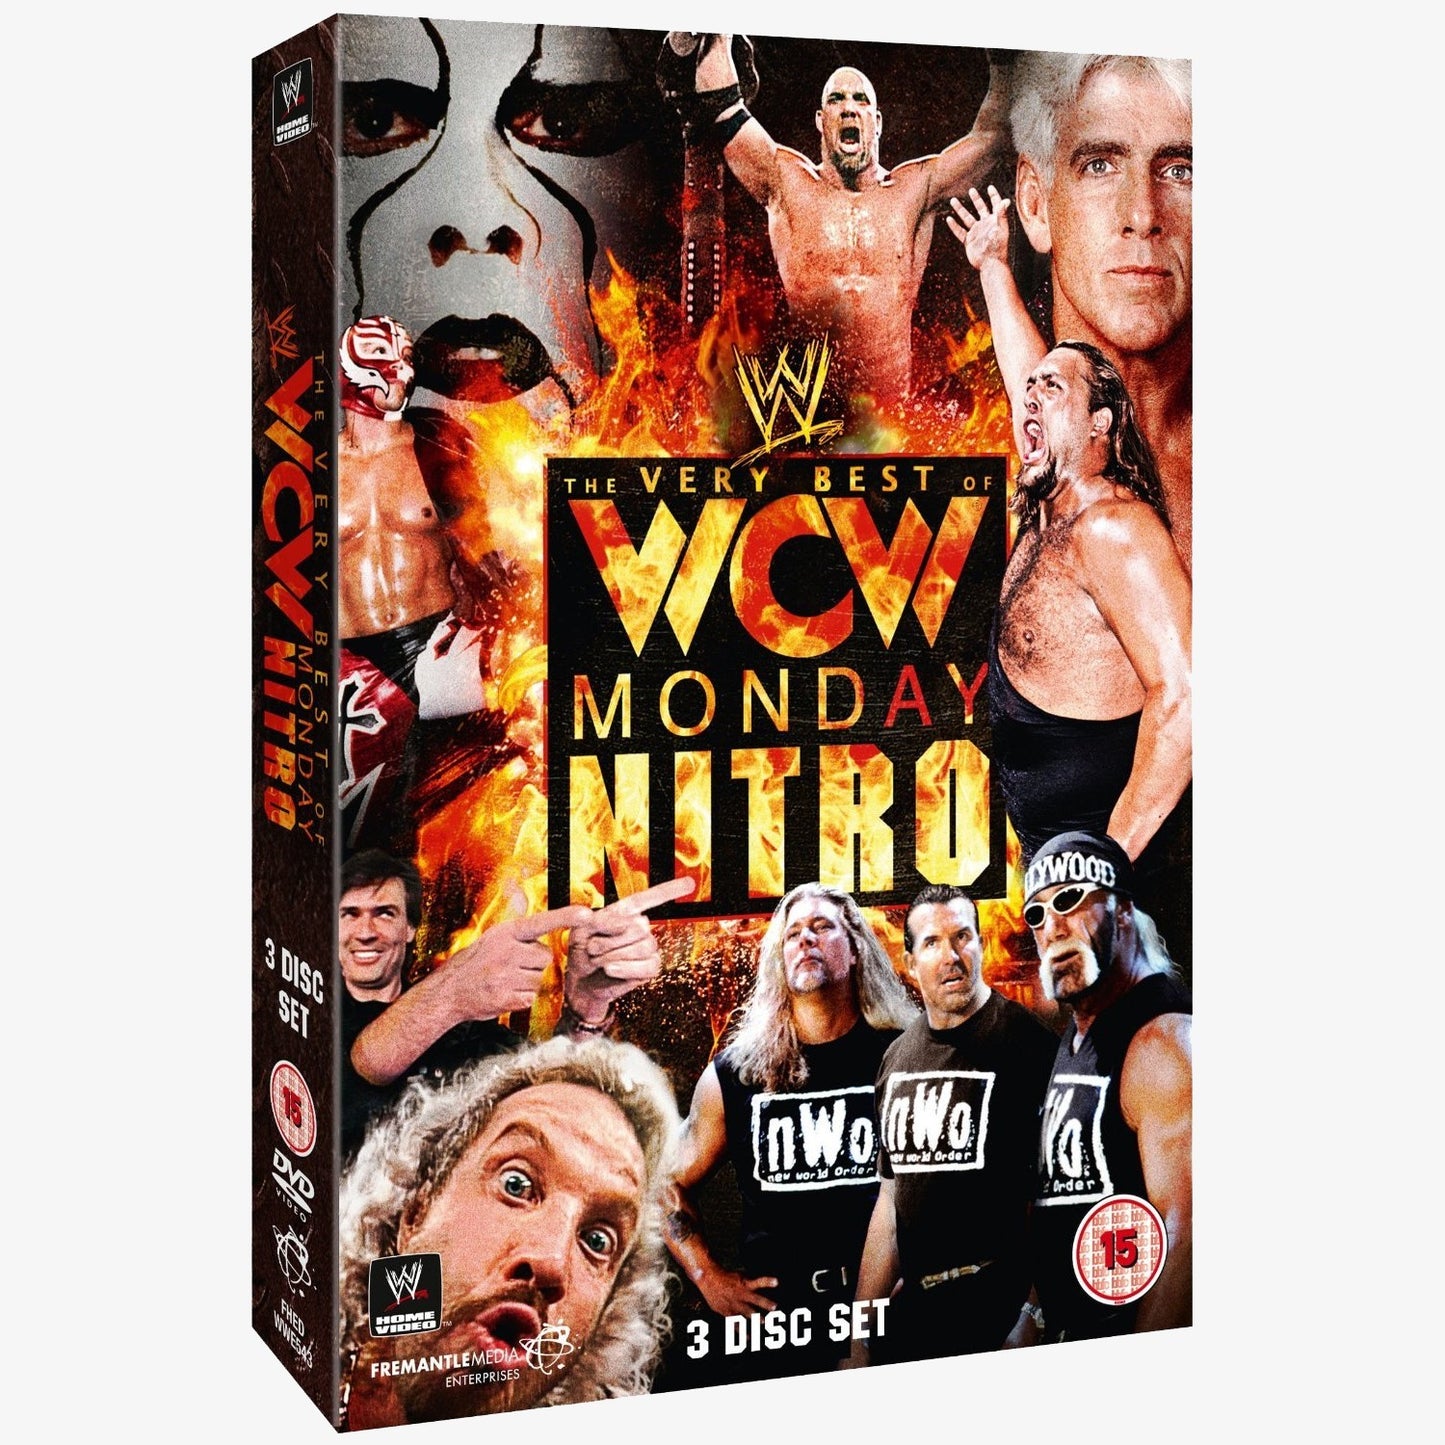 WWE The Very Best of WCW Monday Nitro DVD